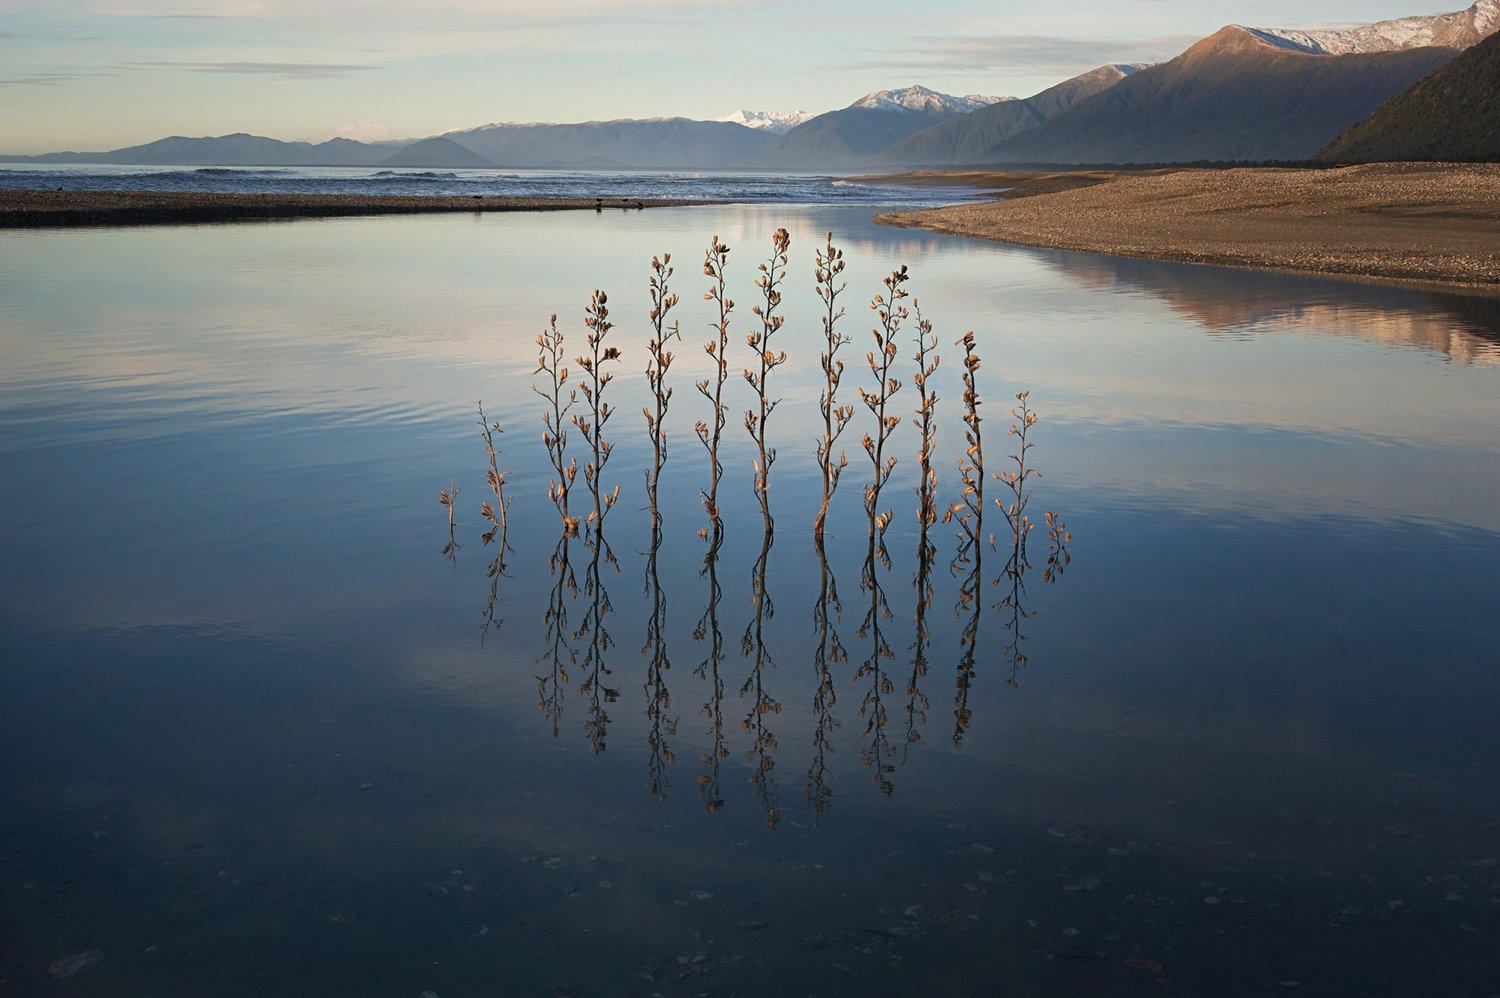 Flax Flower Cycle. Haast Beach, Nuova Zelanda